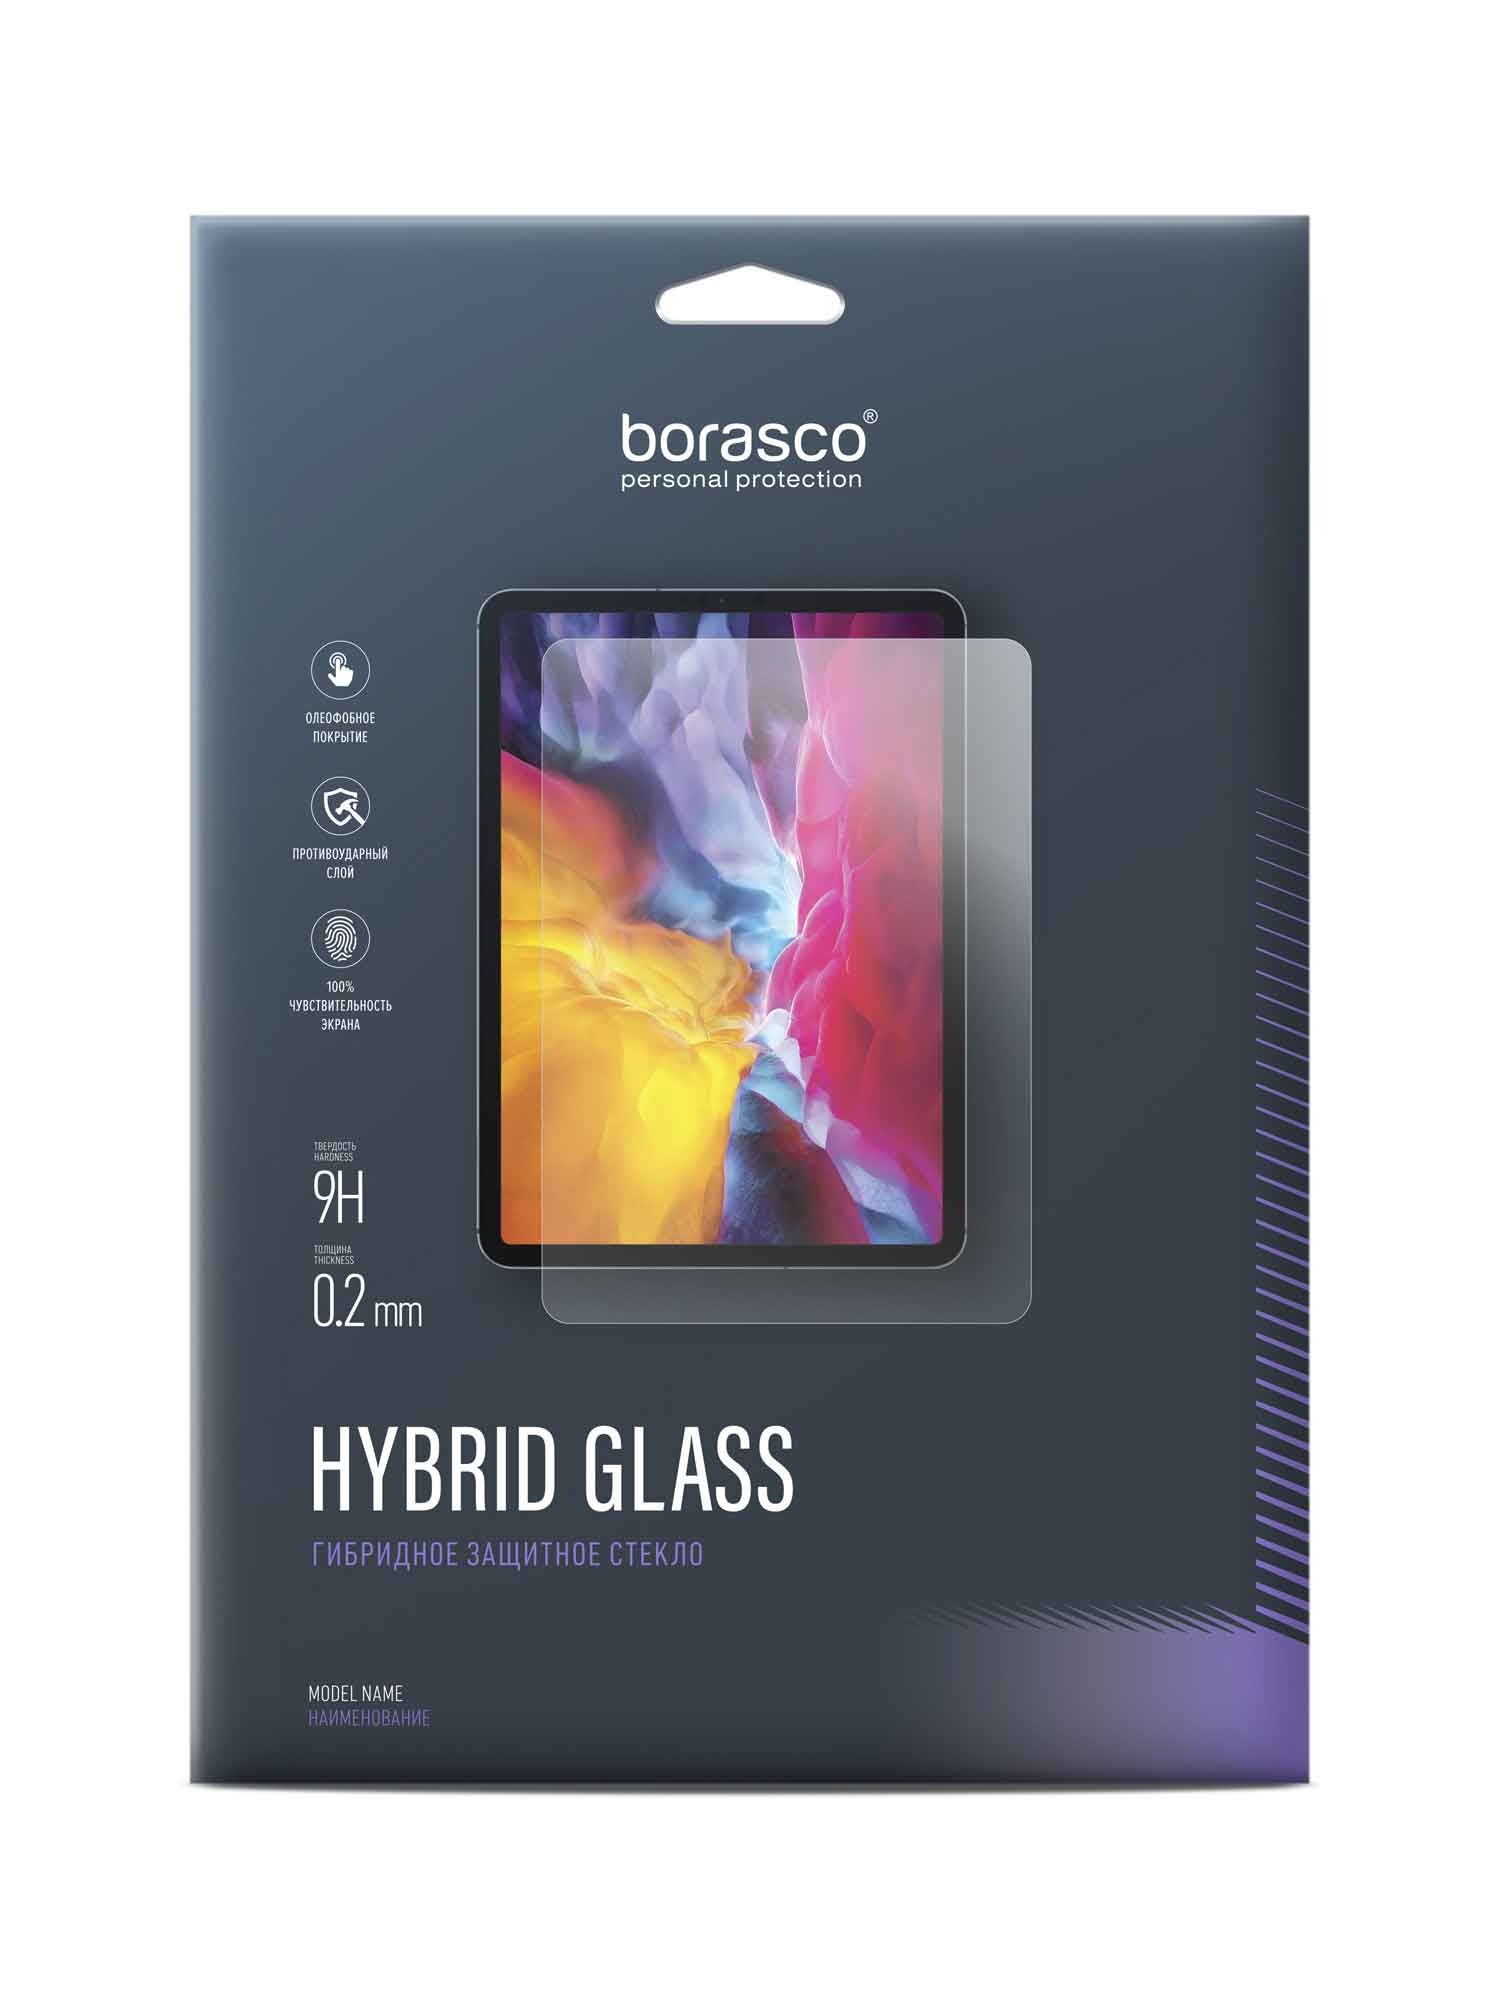 Защитное стекло BoraSCO Hybrid Glass для Prestigio Wize 1107 4G 7 стекло защитное borasco hybrid glass prestigio wize 1107 4g 7 прозрачное